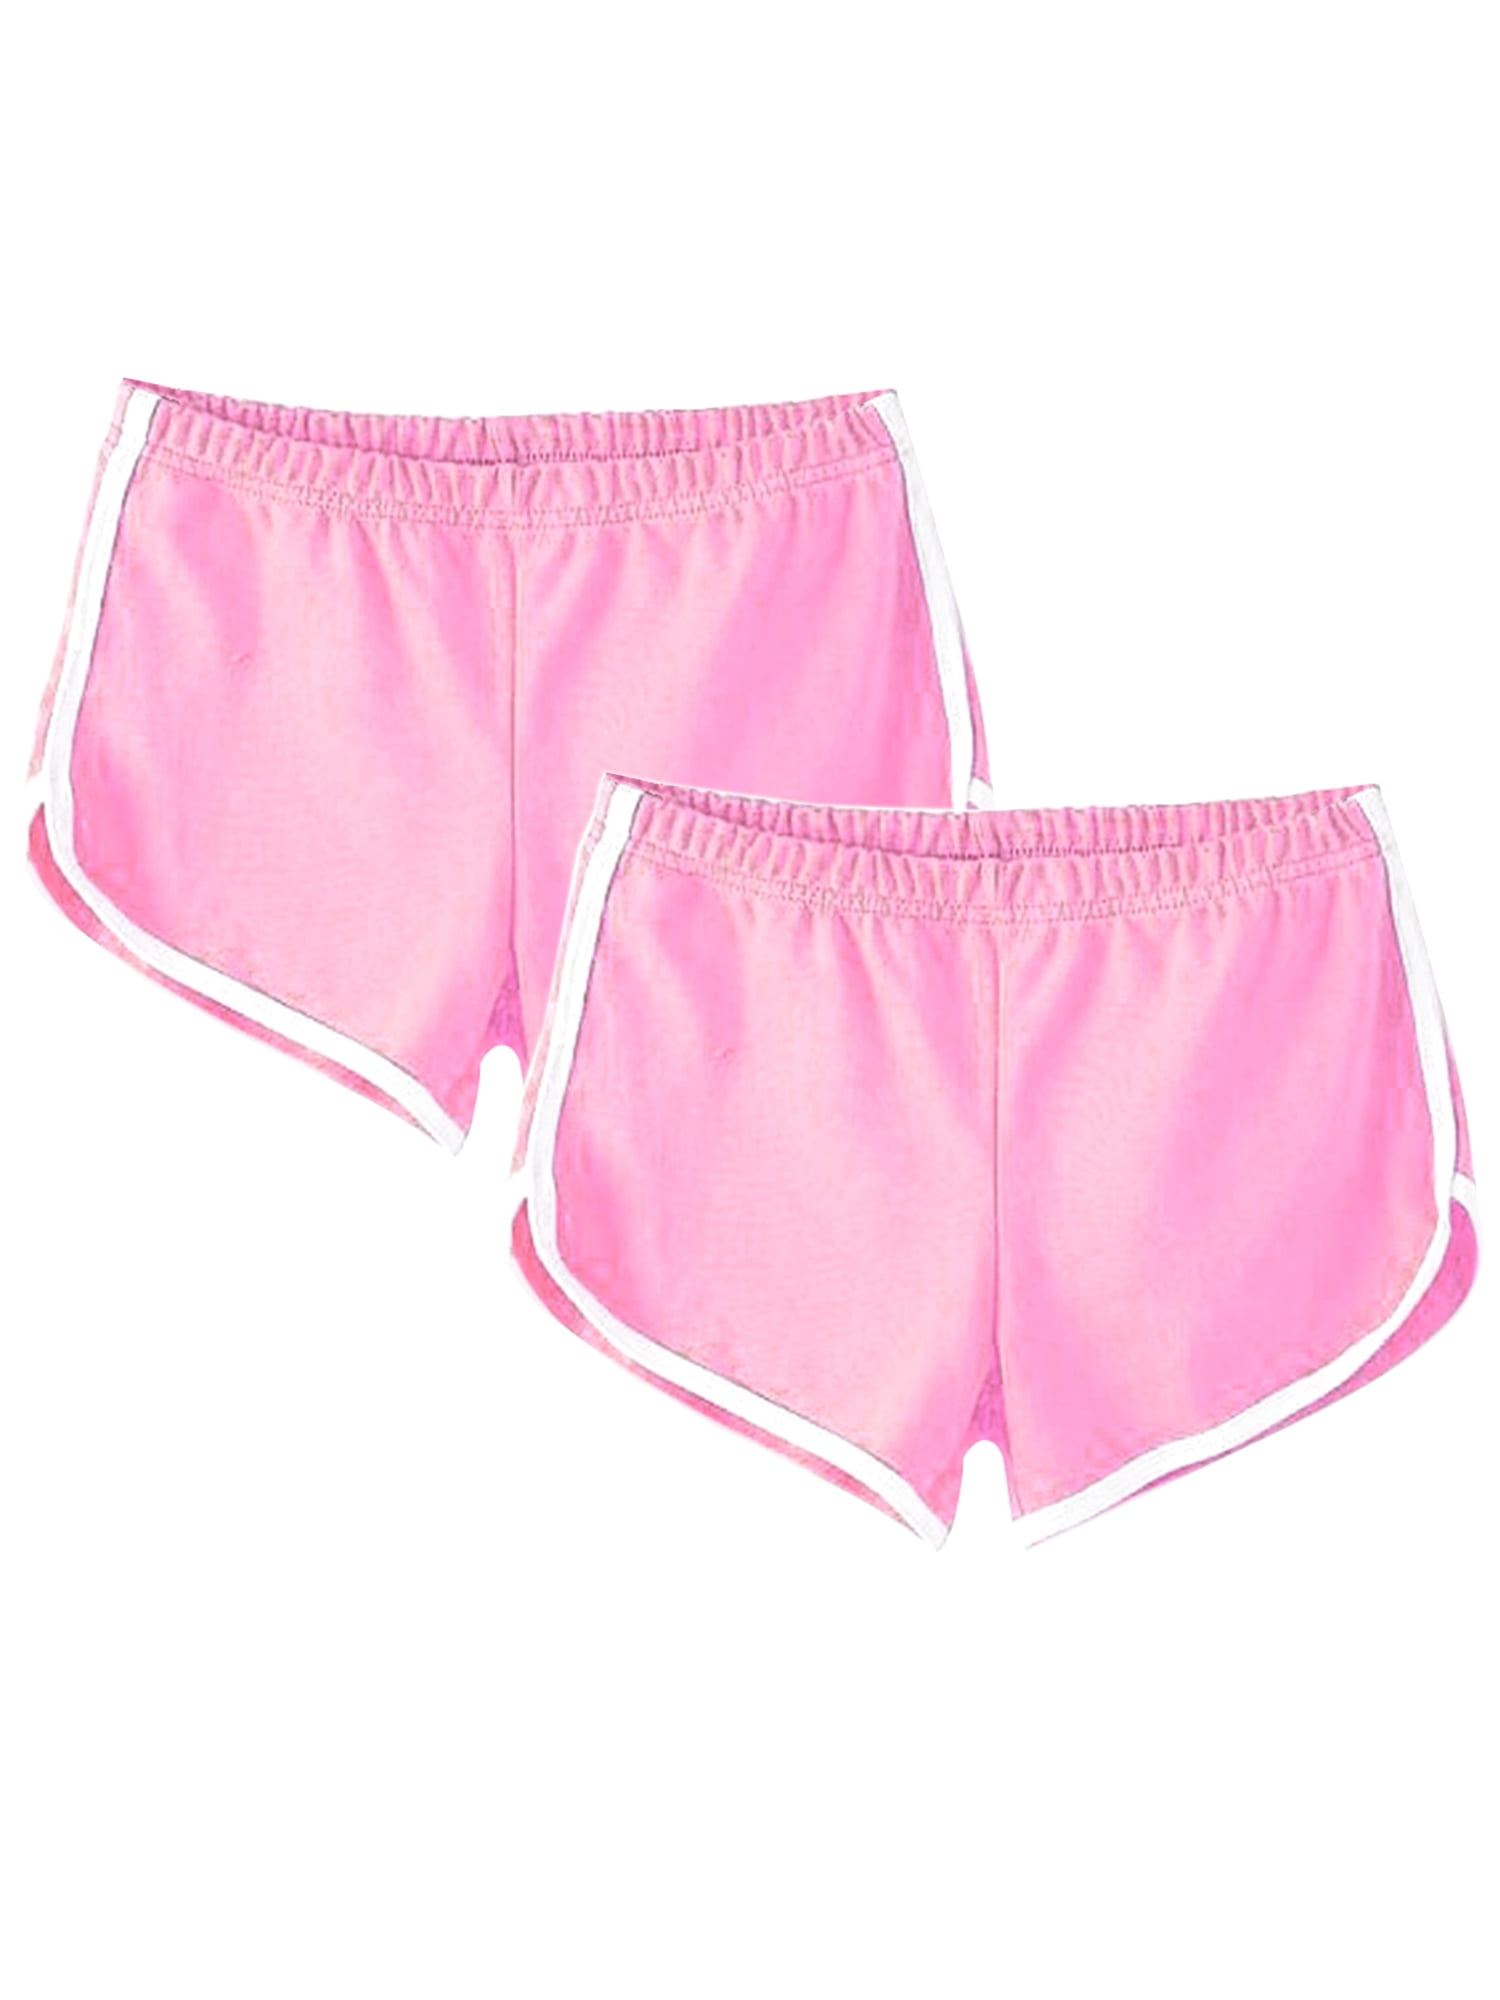 Women Sports Shorts Yoga Underwear Casual Gym Jogging Lounge Summer Hot Pants